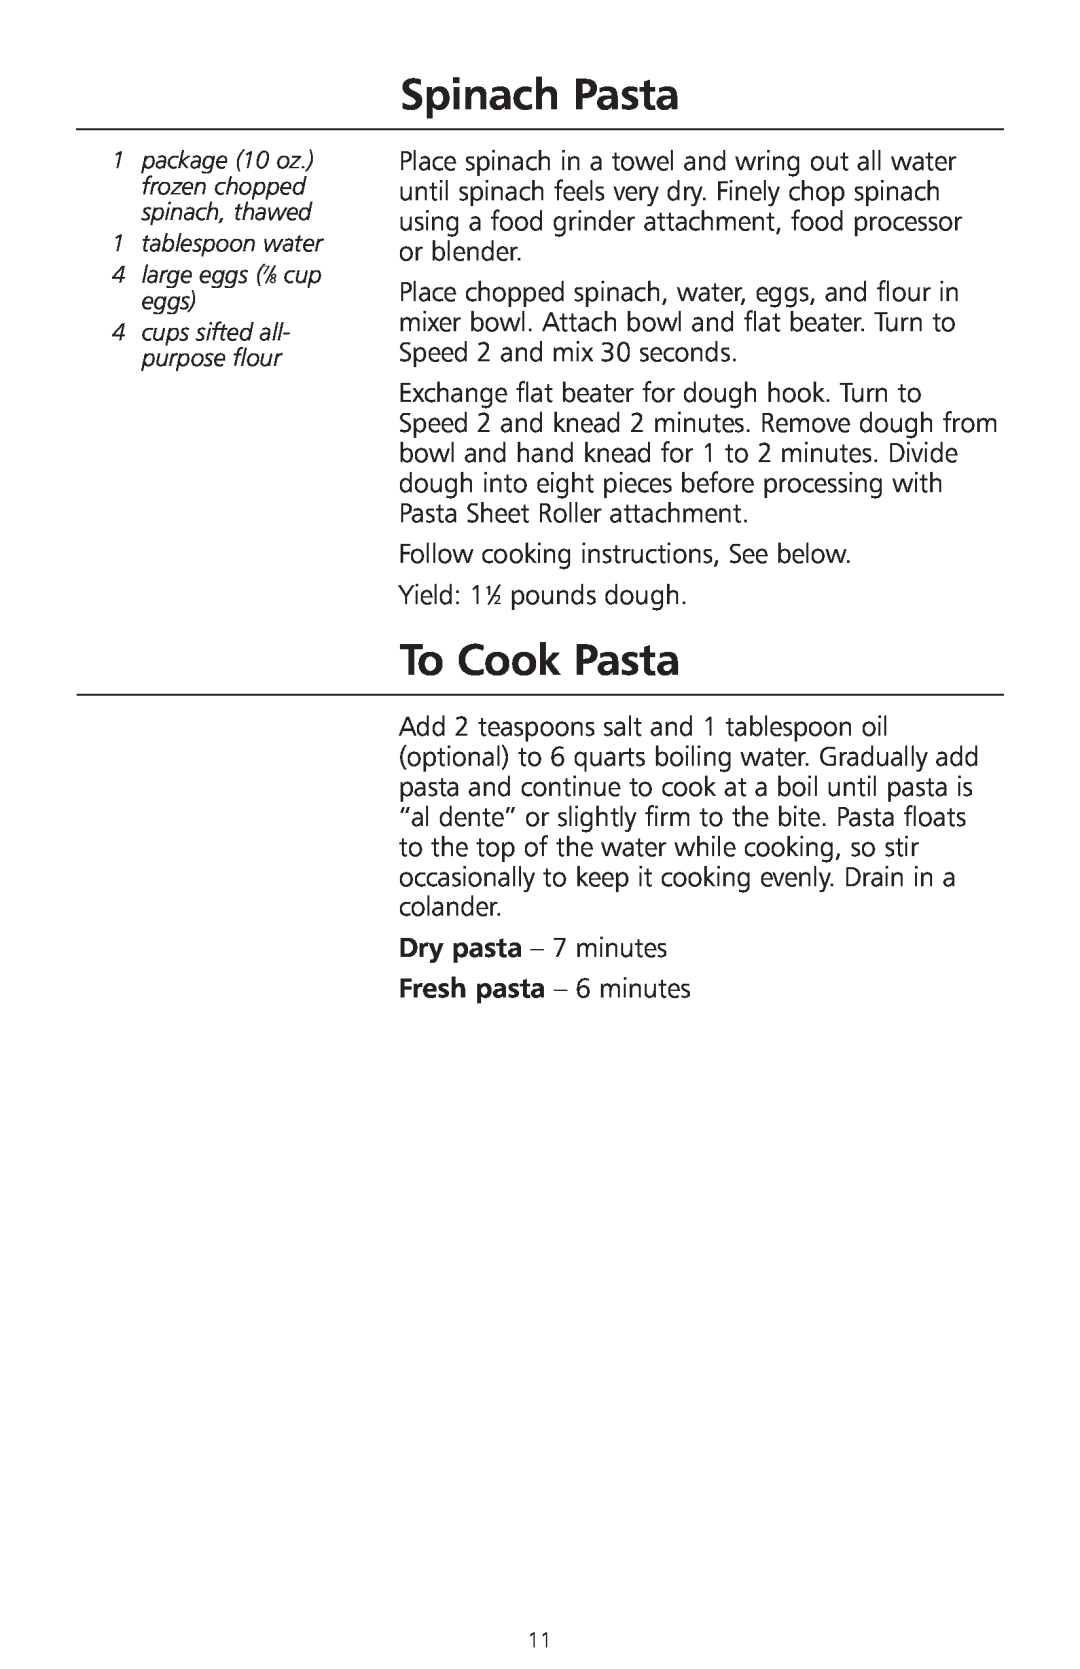 KitchenAid KPRA manual Spinach Pasta, To Cook Pasta, Fresh pasta - 6 minutes 